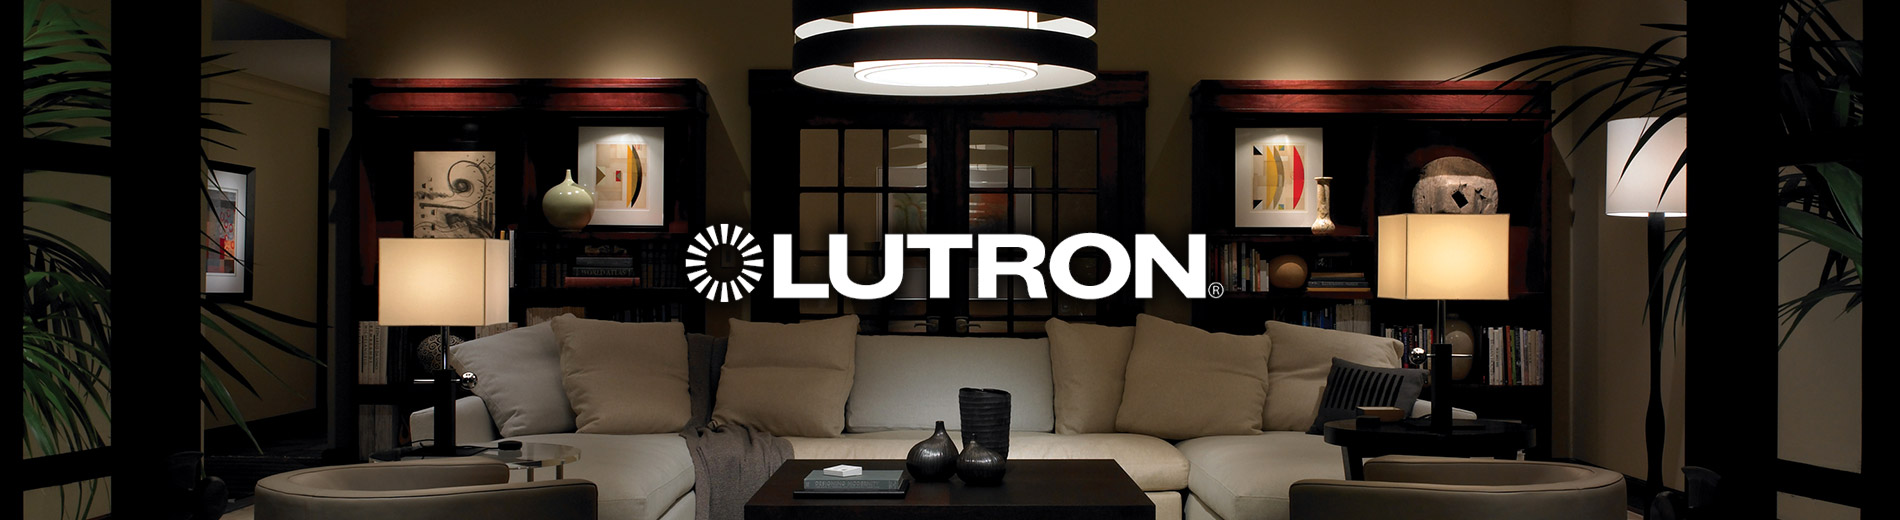 homeflow-smart-home-nha-thong-minh-Lutron-Lighting